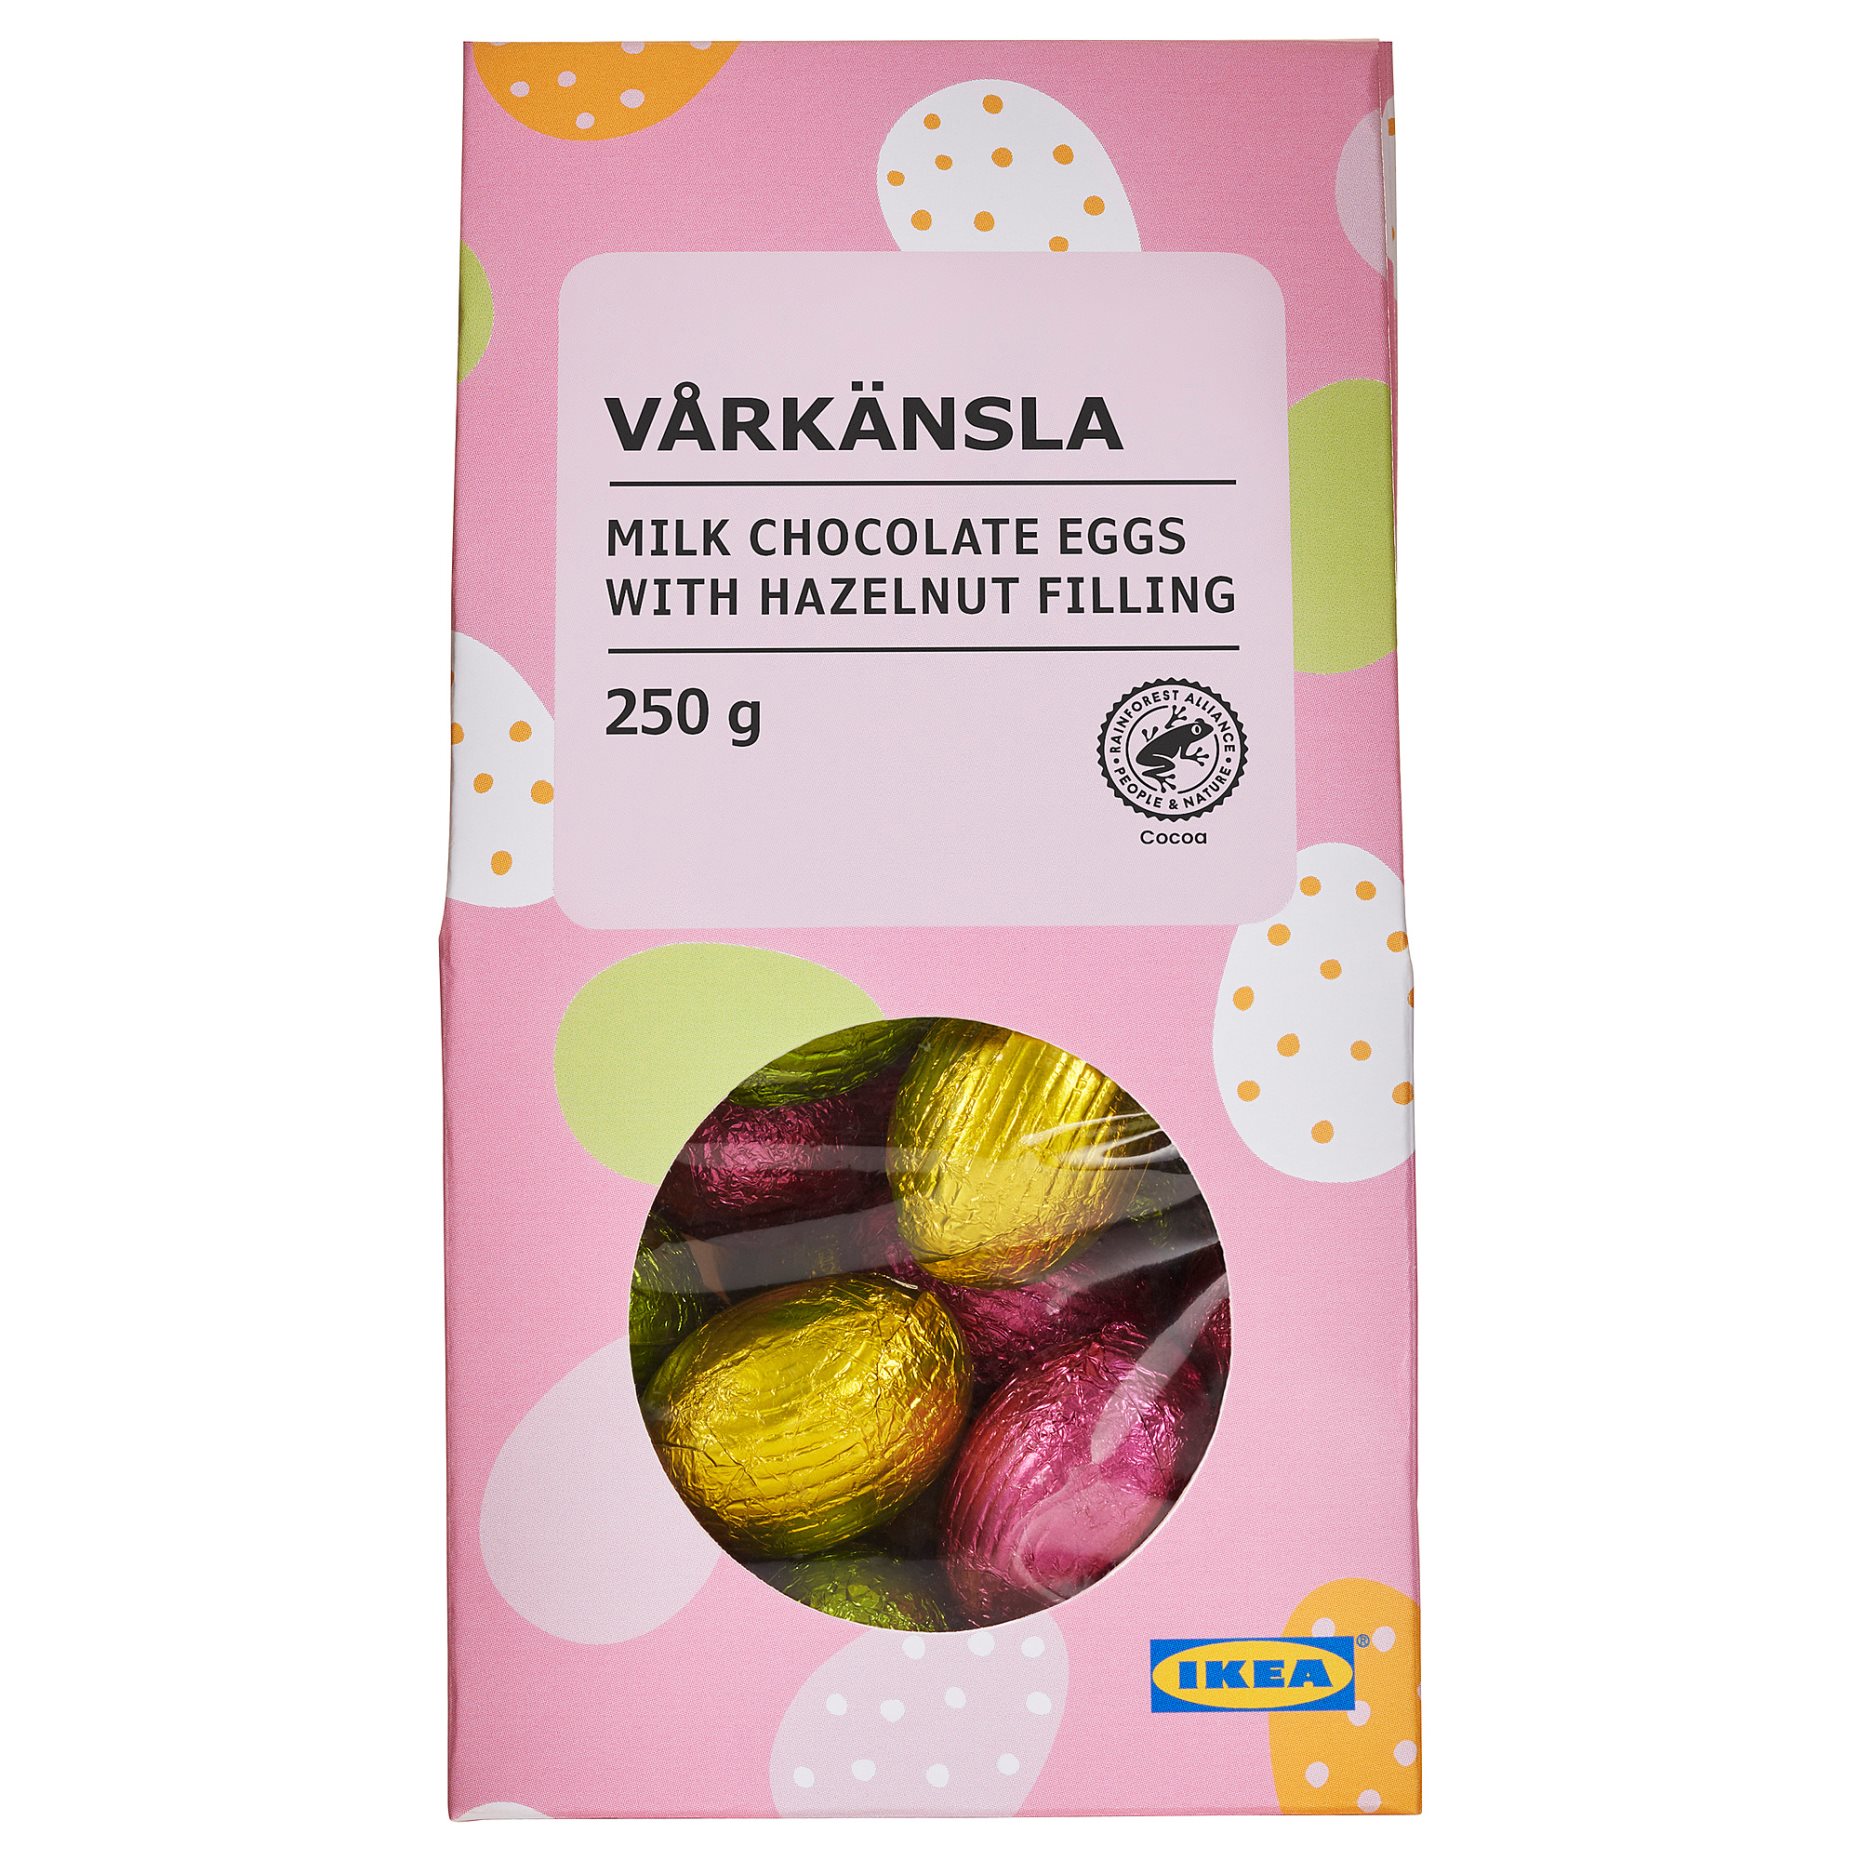 VÅRKÄNSLA, milk chocolate eggs with hazelnut filling/Rainforest Alliance Certified, 250 g, 505.463.38